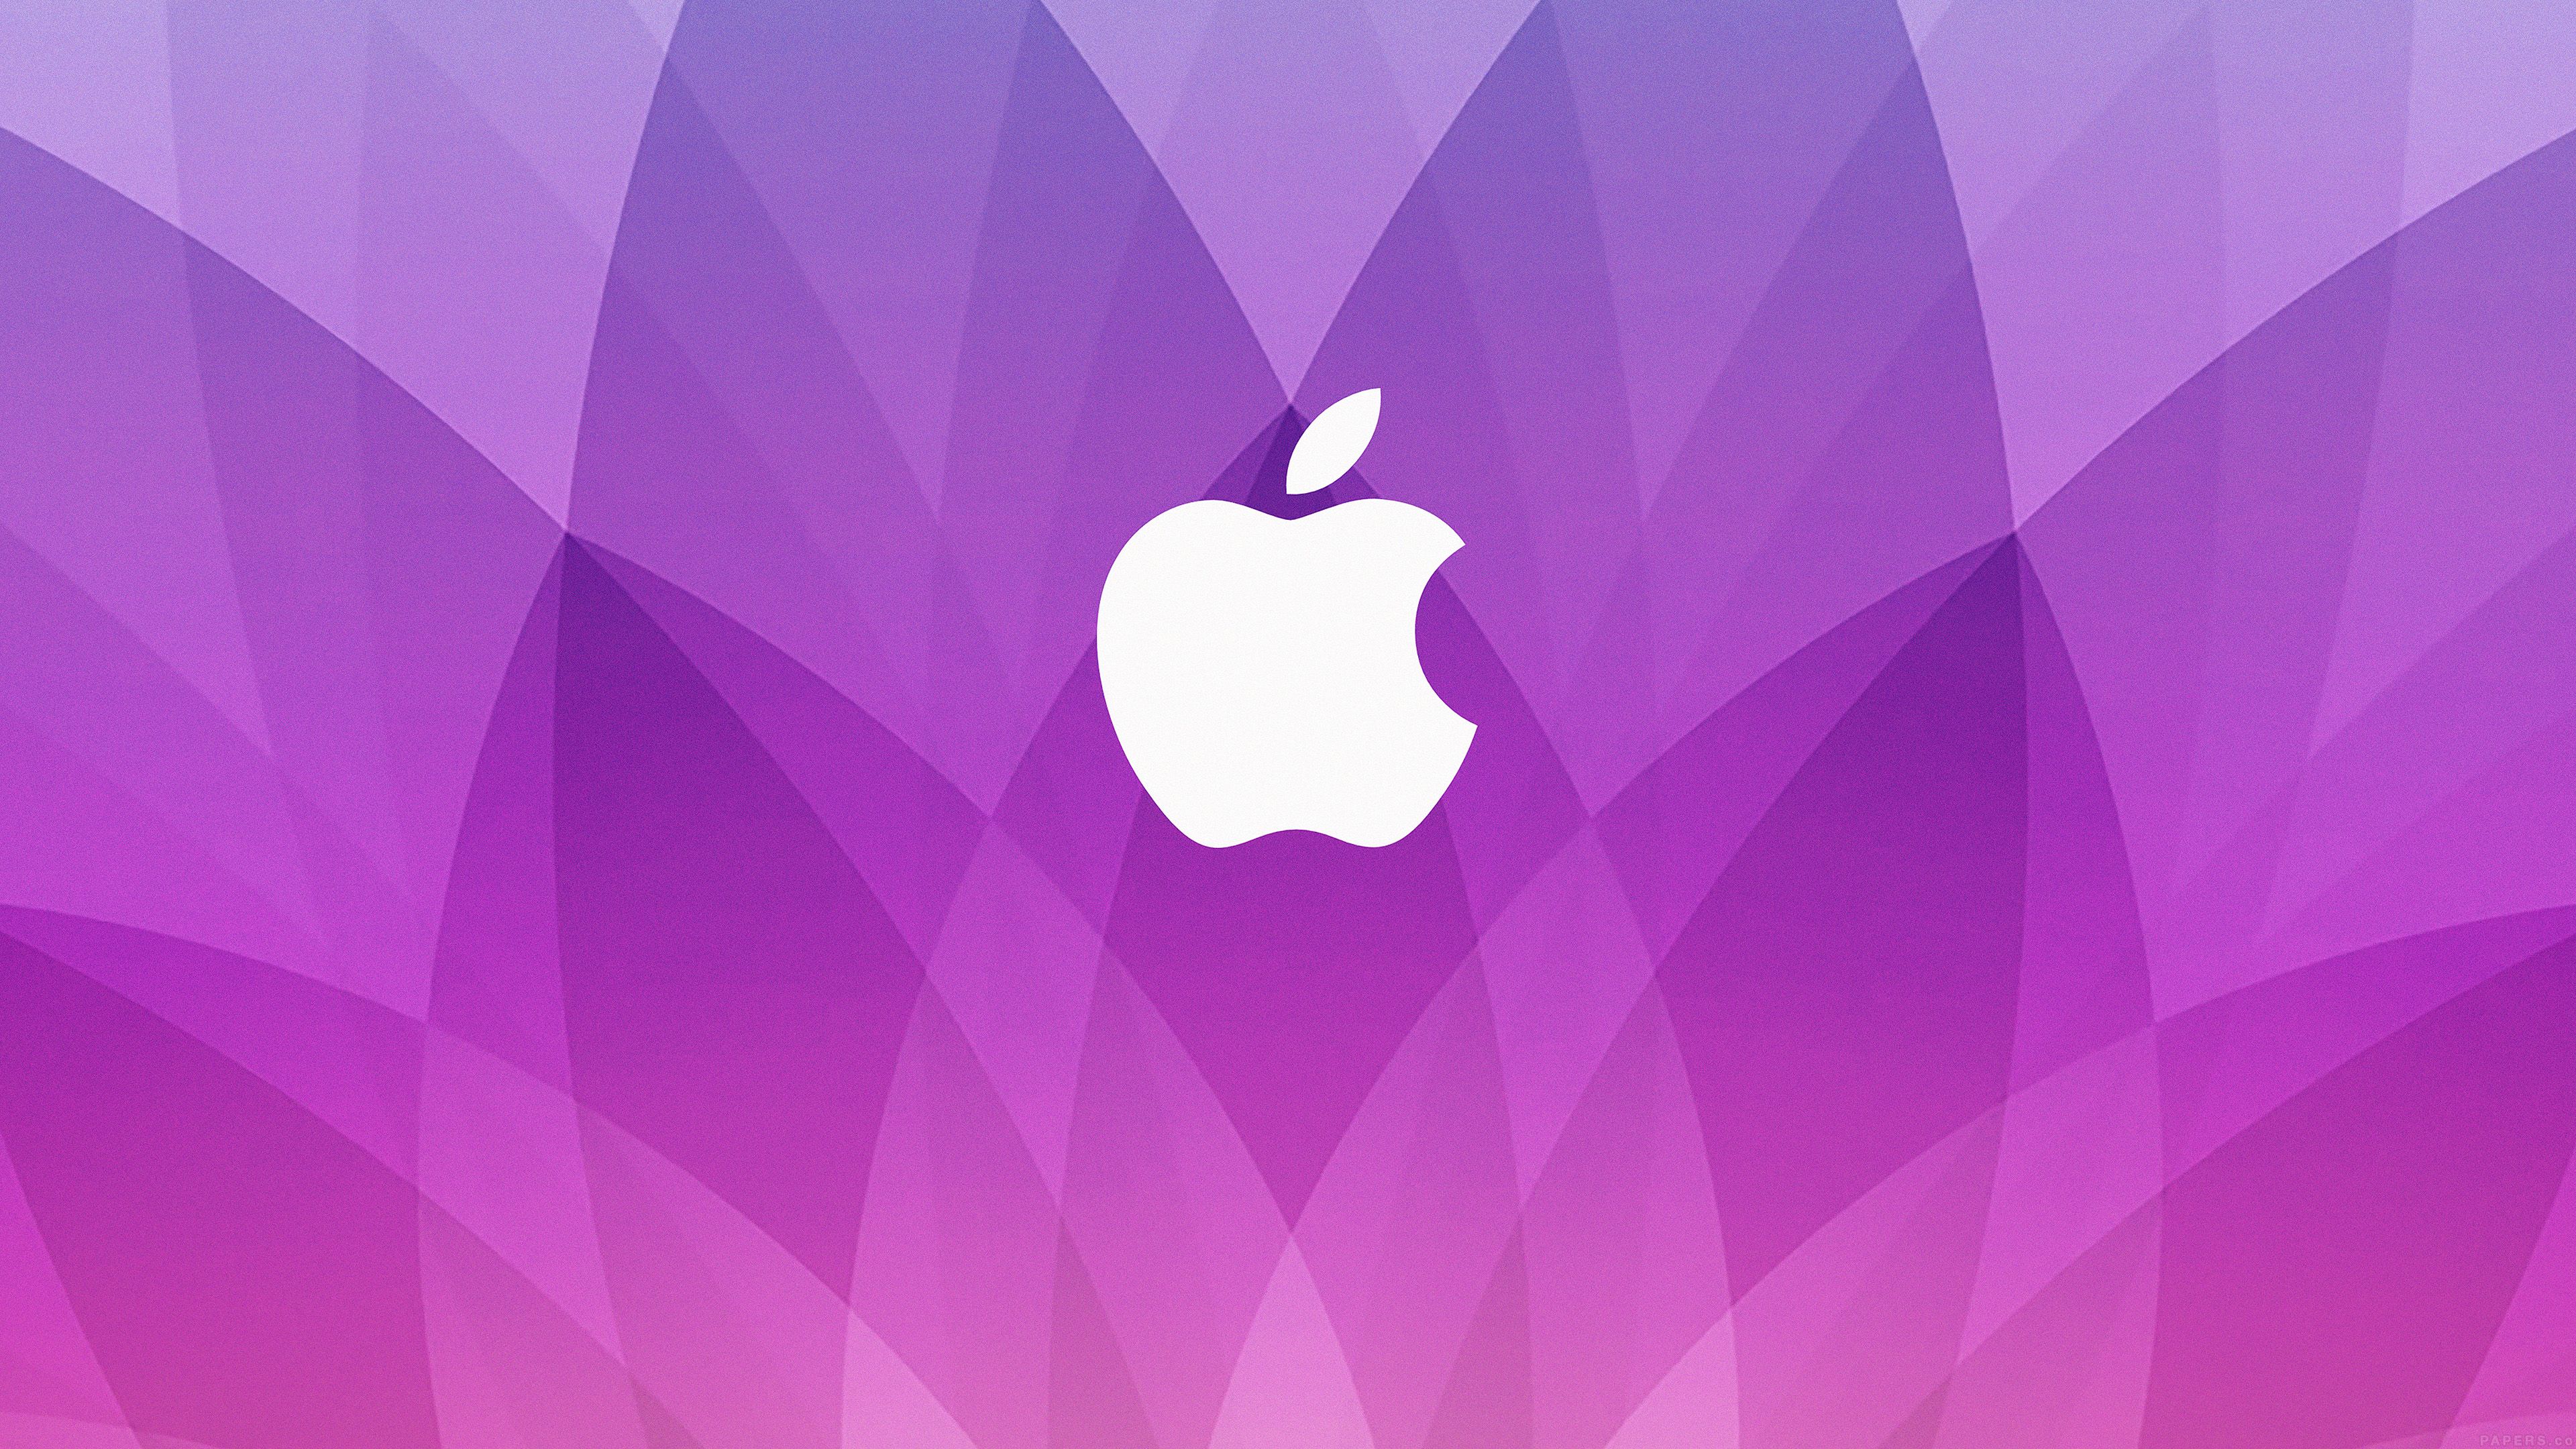 wallpaper for desktop, laptop. apple event march 2015 purple pattern art